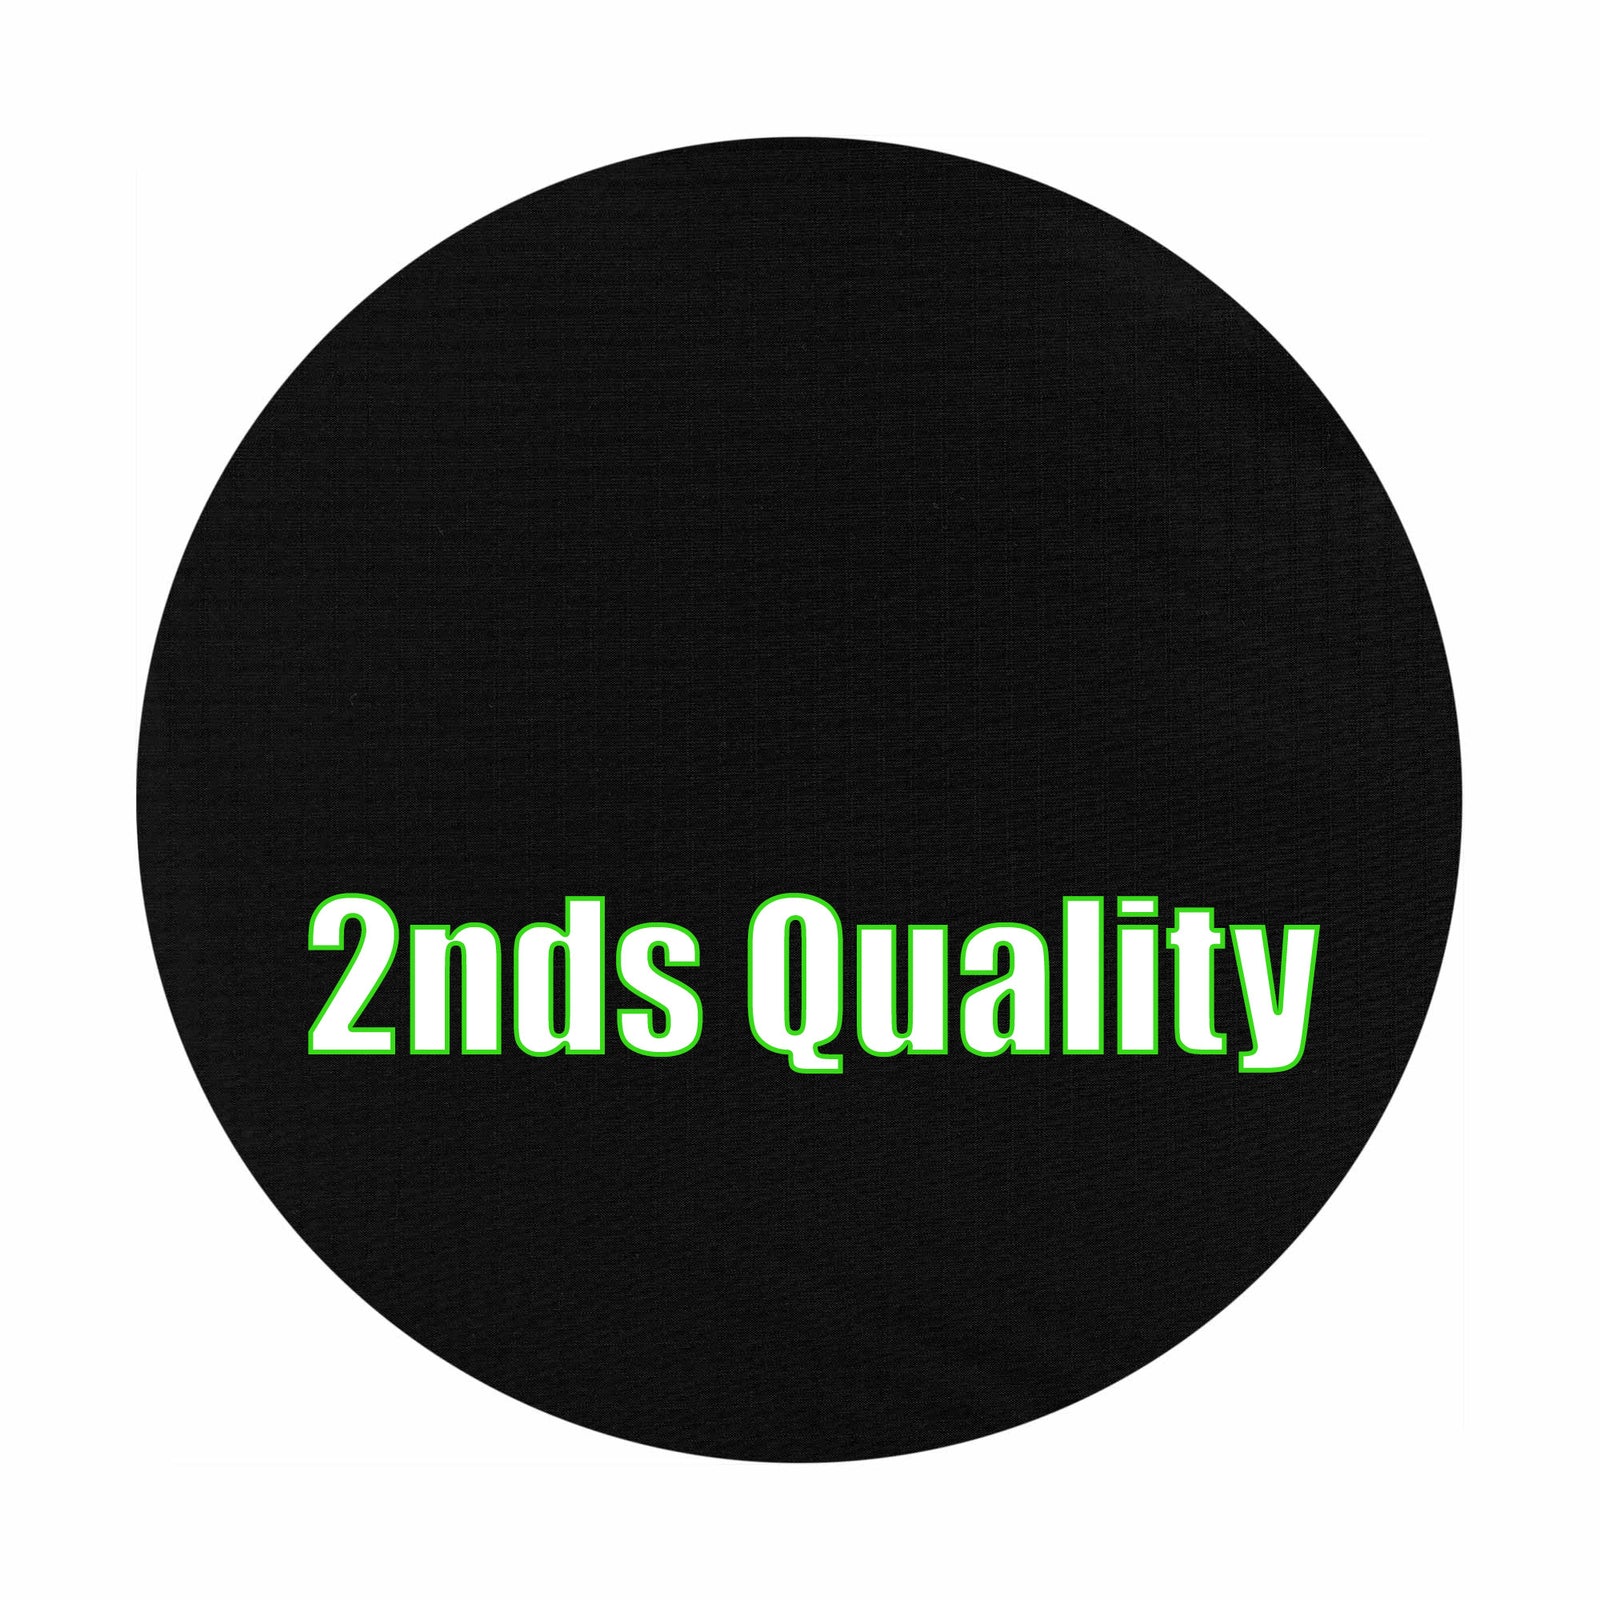 1.6 oz Silpoly - 2nds Quality